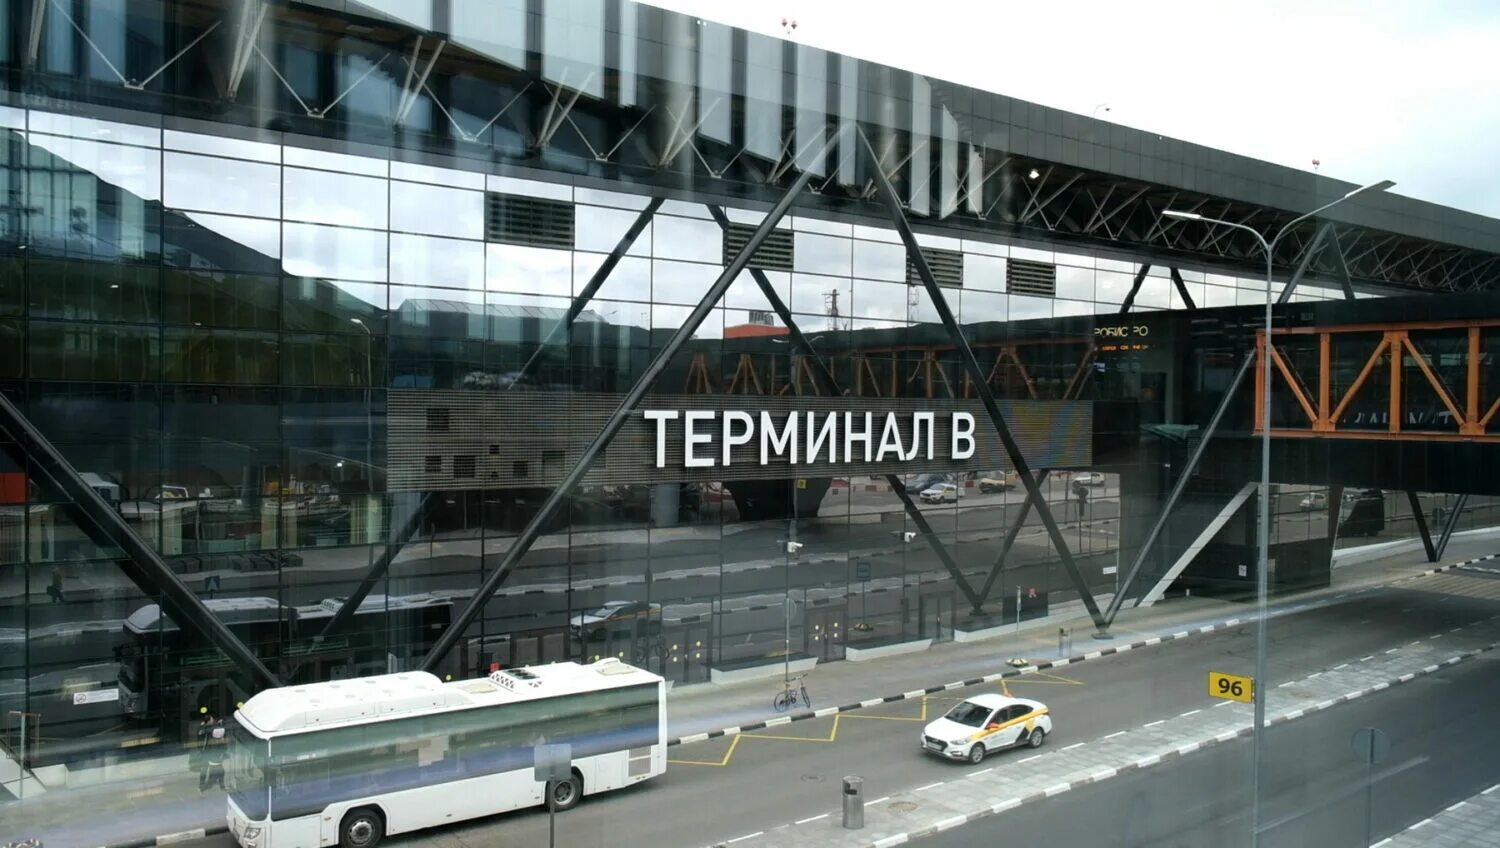 Аэроэкспресс терминал b. ЖД терминал в Шереметьево. Шереметьево терминал b. Шереметьево новый терминал. Шереметьево Аэроэкспресс Железнодорожный терминал.